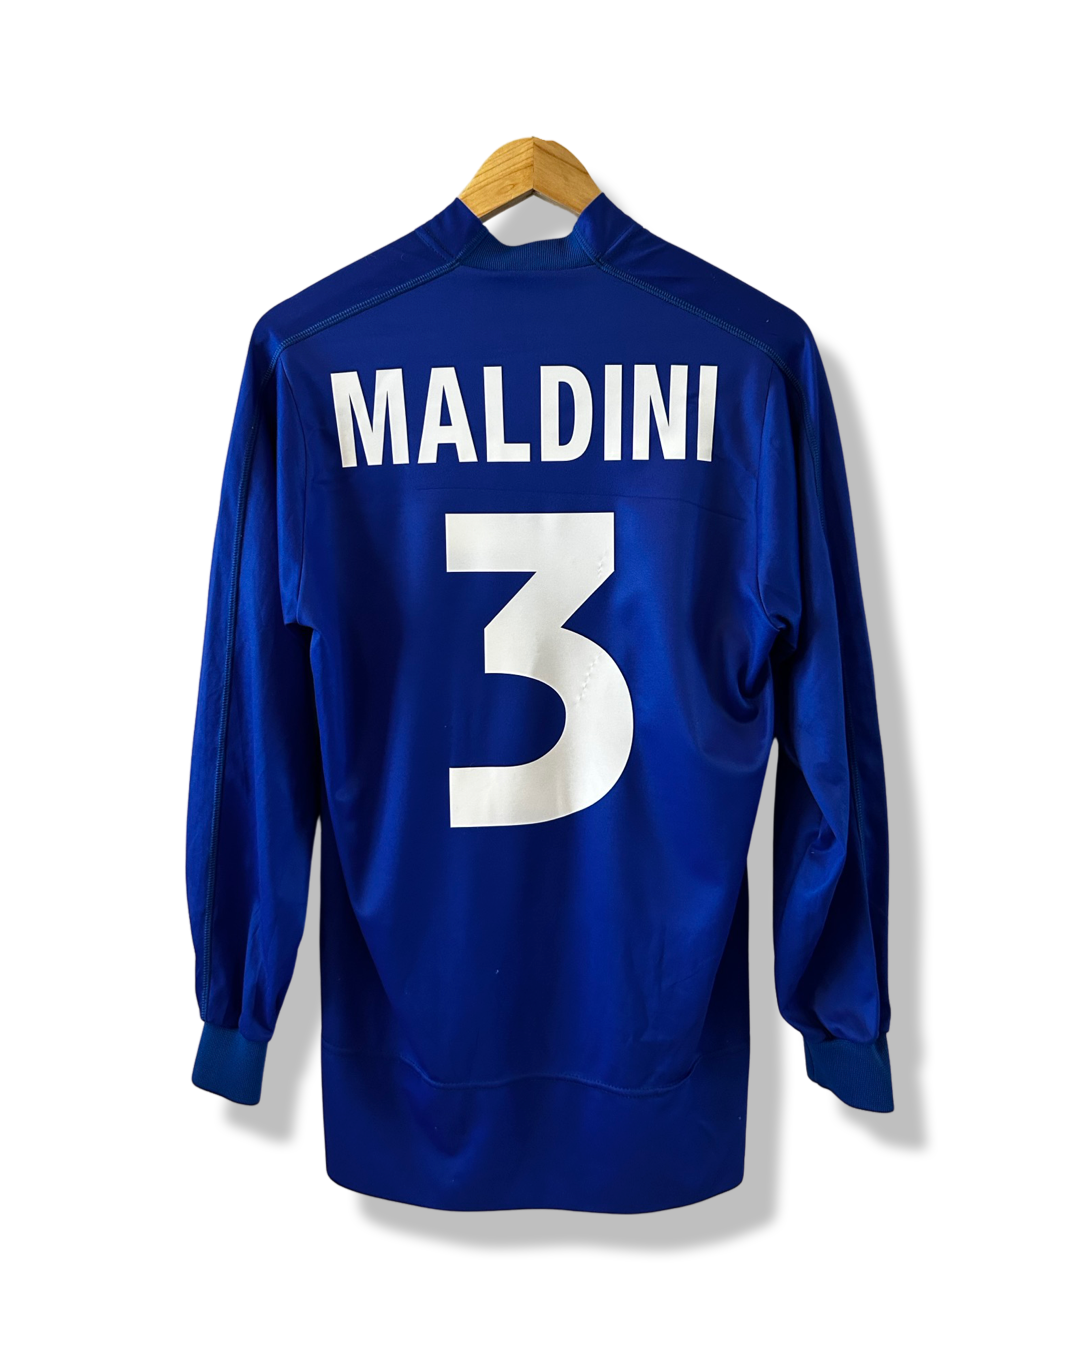 Italy National Football Team 1999-00 Home shirt, #3 Paolo Maldini - S